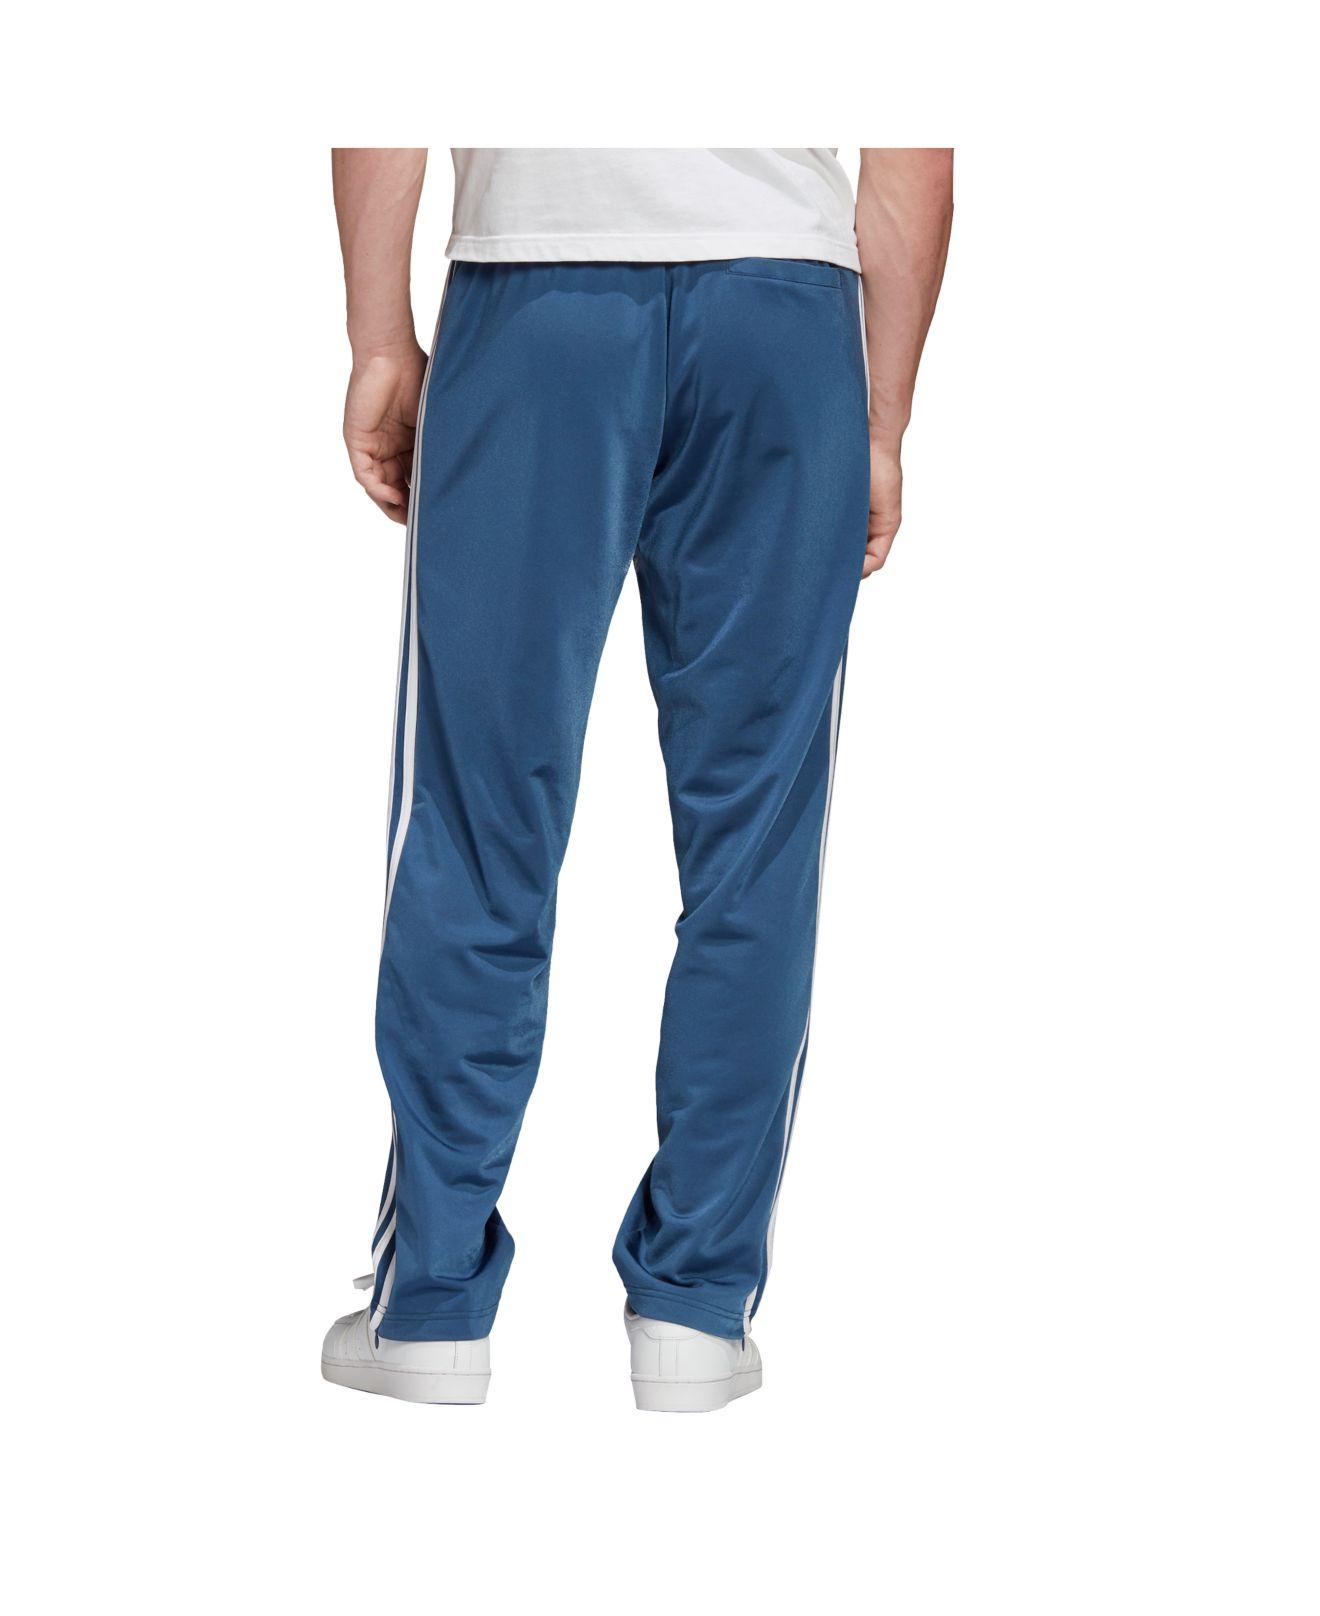 adidas Originals Firebird Track Pants in Blue for Men